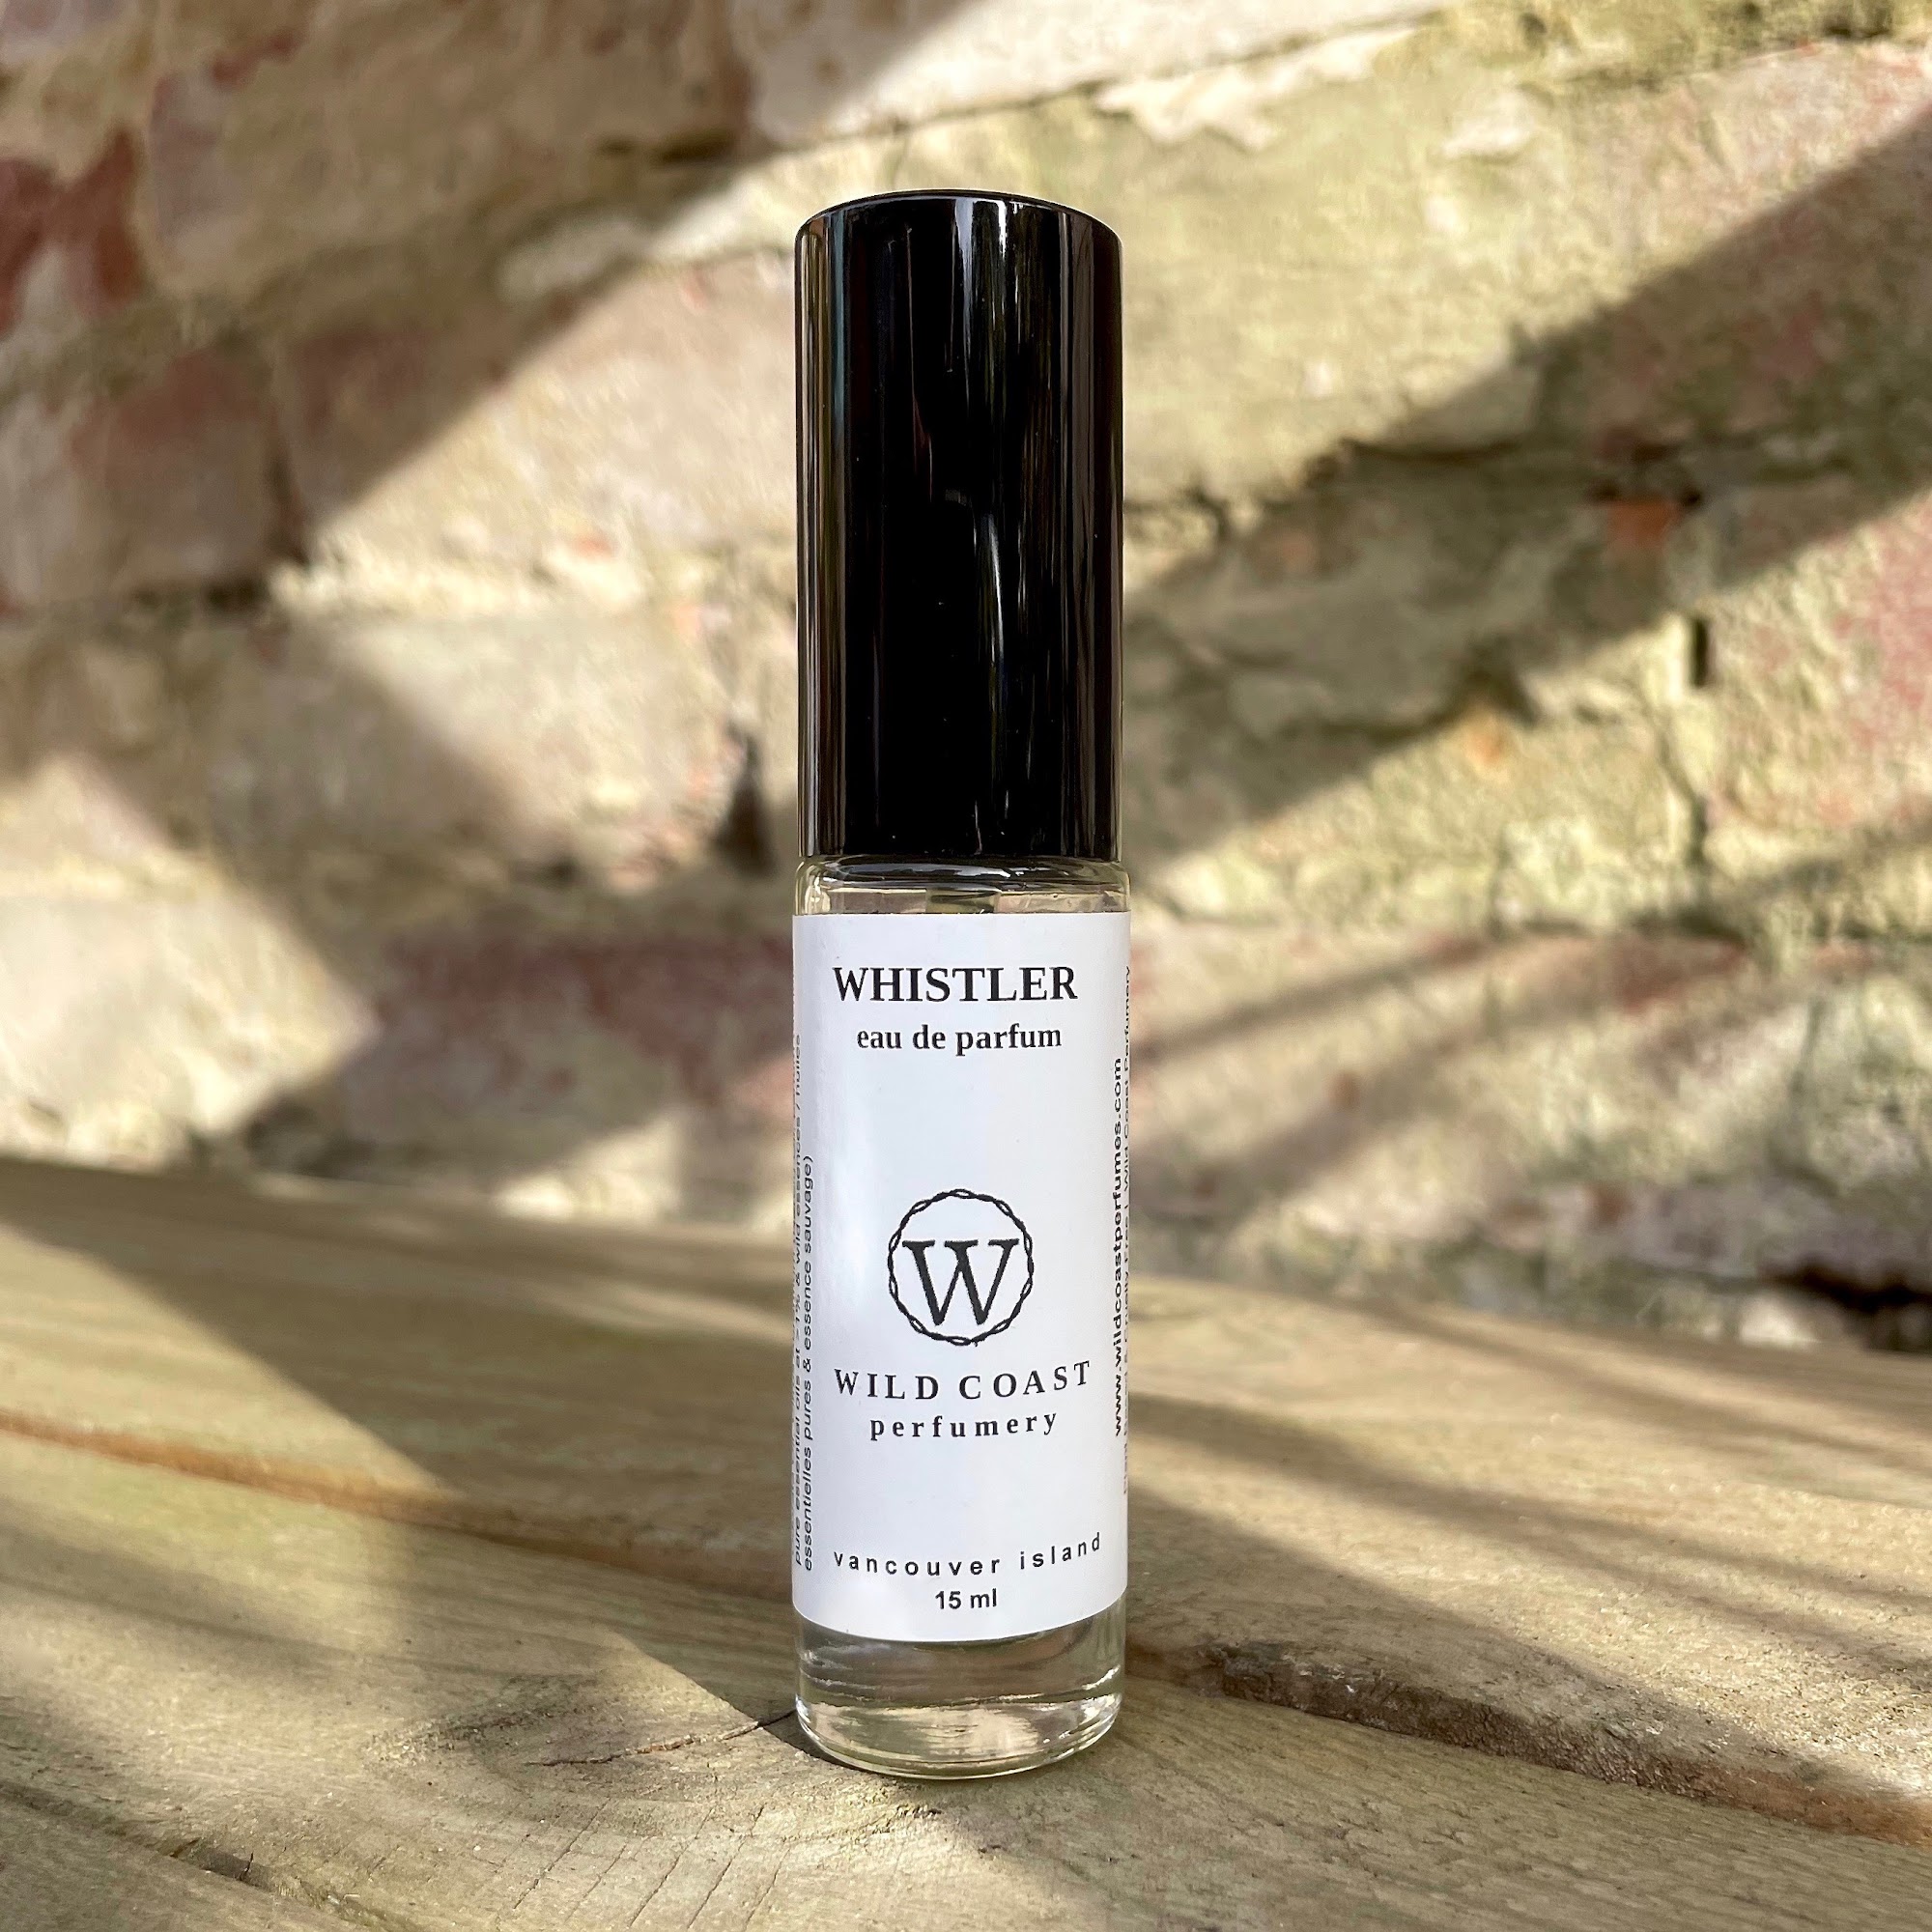 Wild Coast Perfumery bottle of Whistler perfume